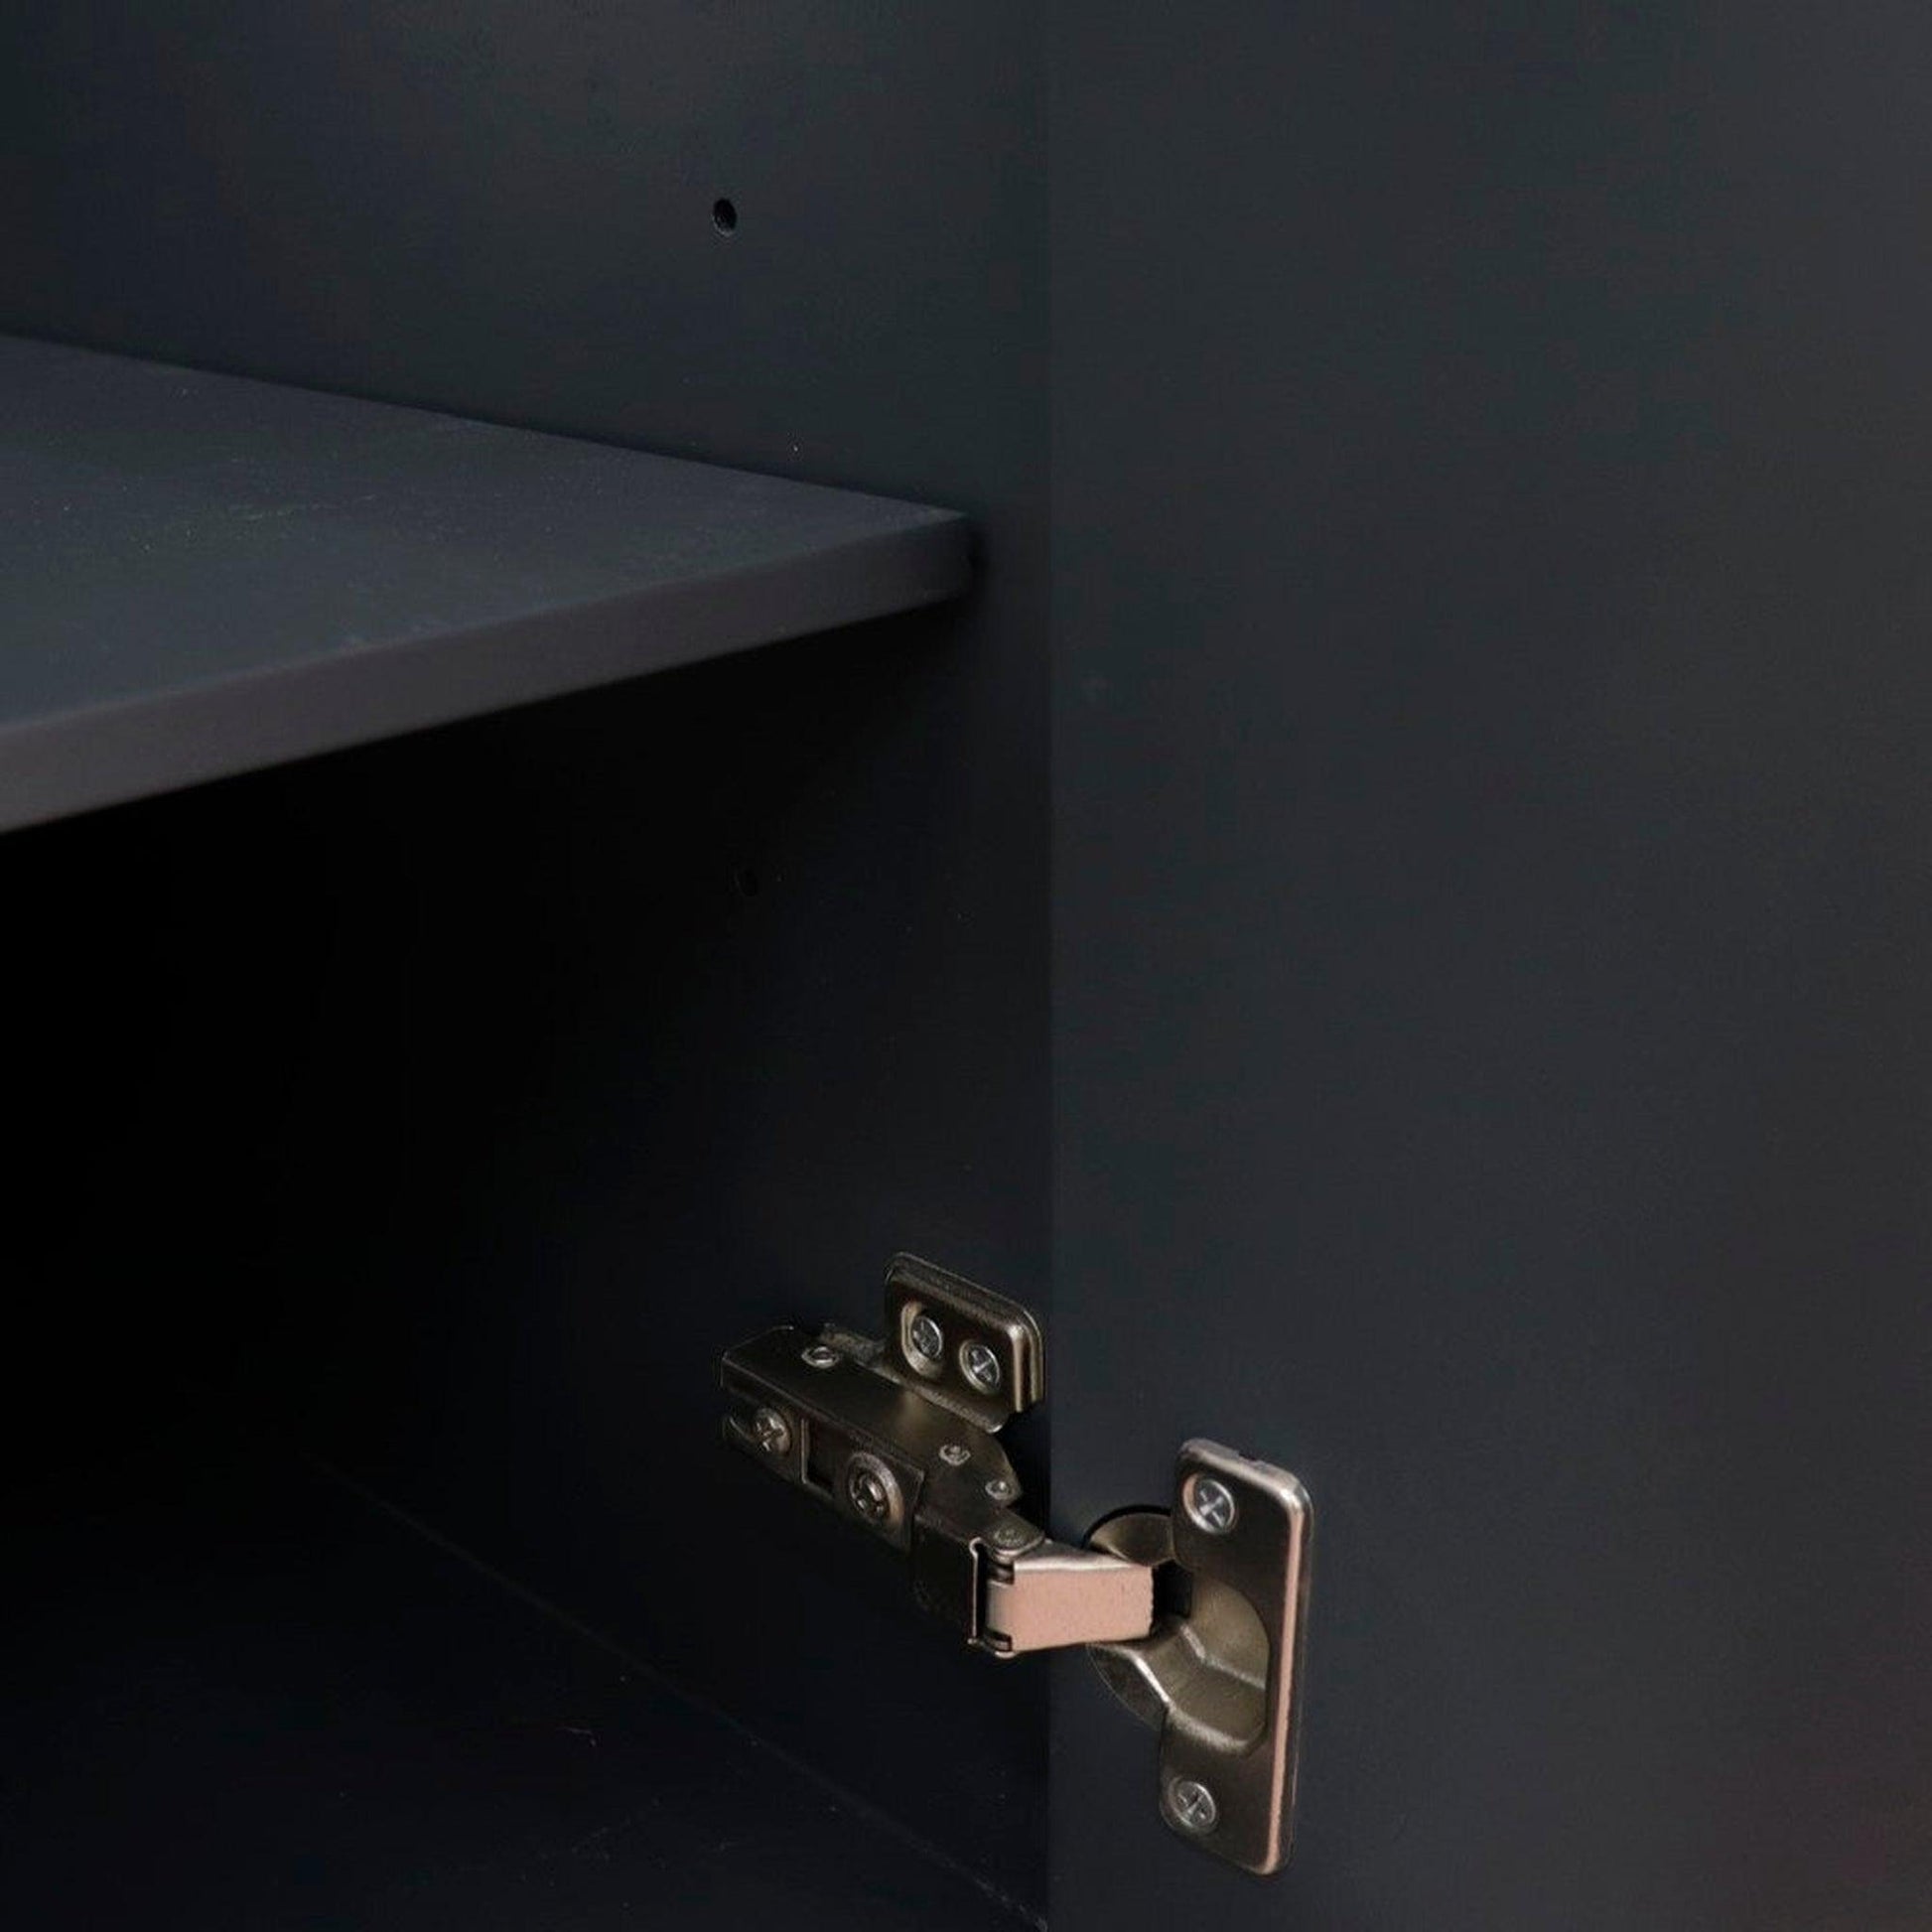 Bellaterra Home Forli 61" 2-Door 6-Drawer Dark Gray Freestanding Vanity Set With Ceramic Undermount Oval Sink and Black Galaxy Granite Top